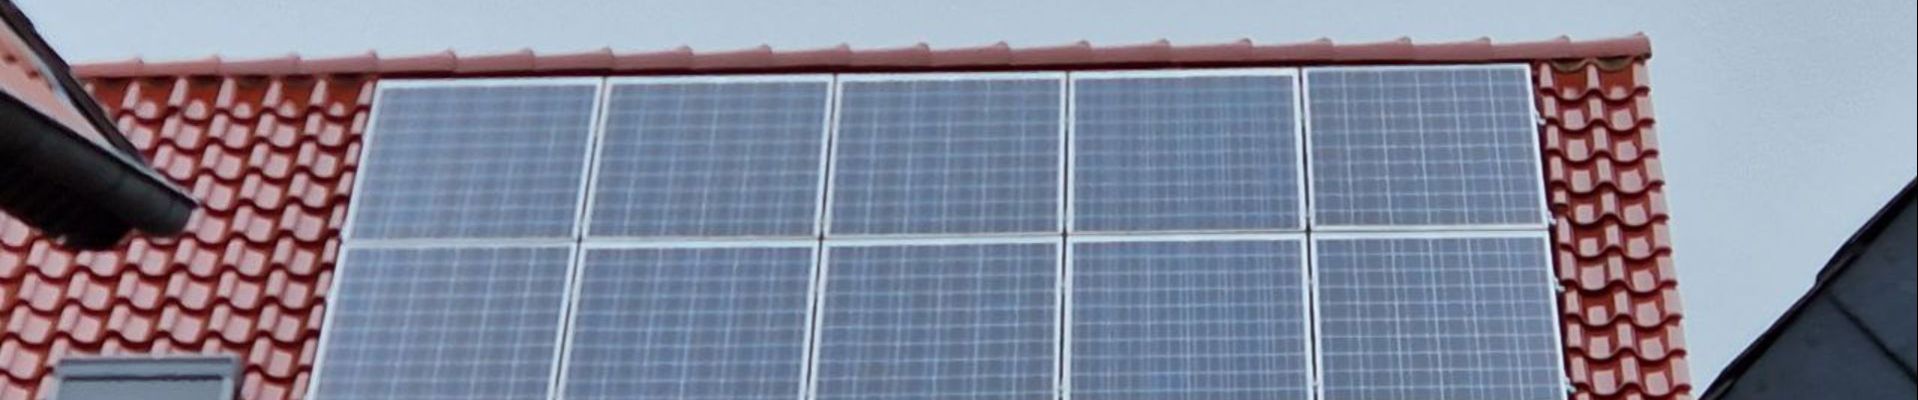 Tarif­ana­ly­se Pho­to­vol­ta­ik­ver­si­che­rung aus dem Hau­se Inter (Stand 02.2018) 